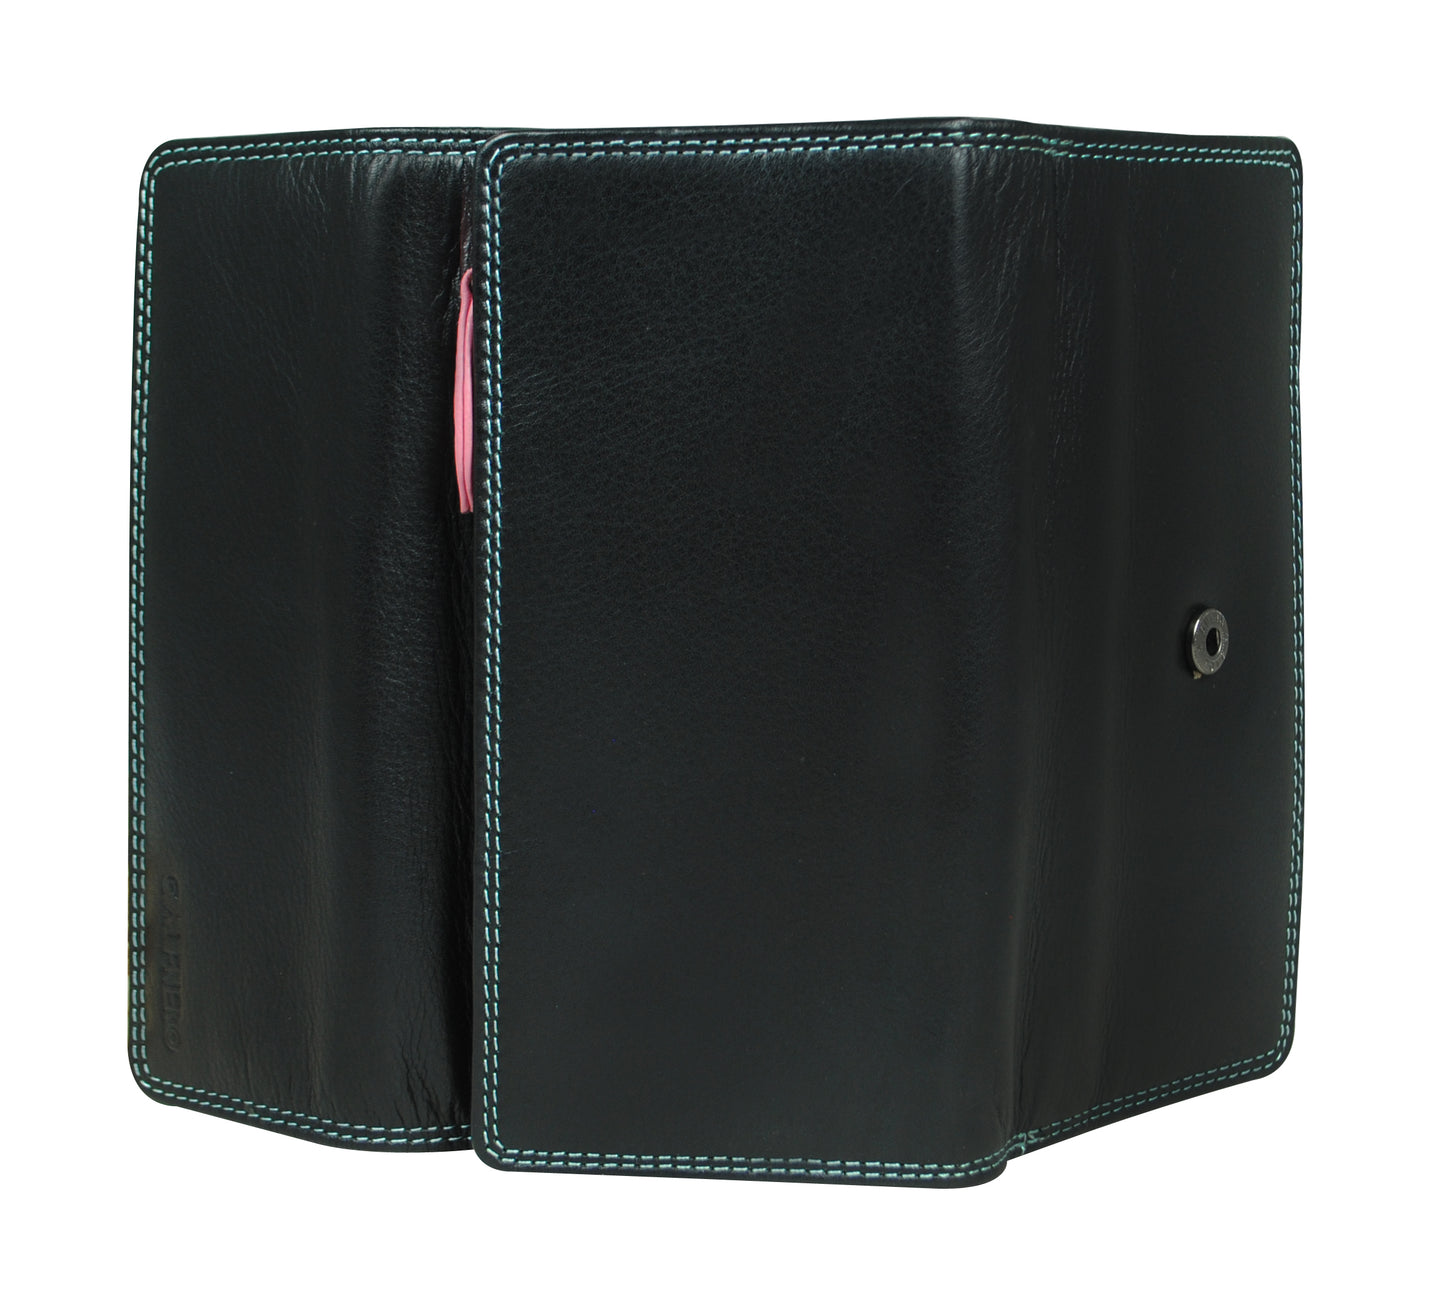 Calfnero Genuine Leather Women's Wallet (10771-Black-Multi)